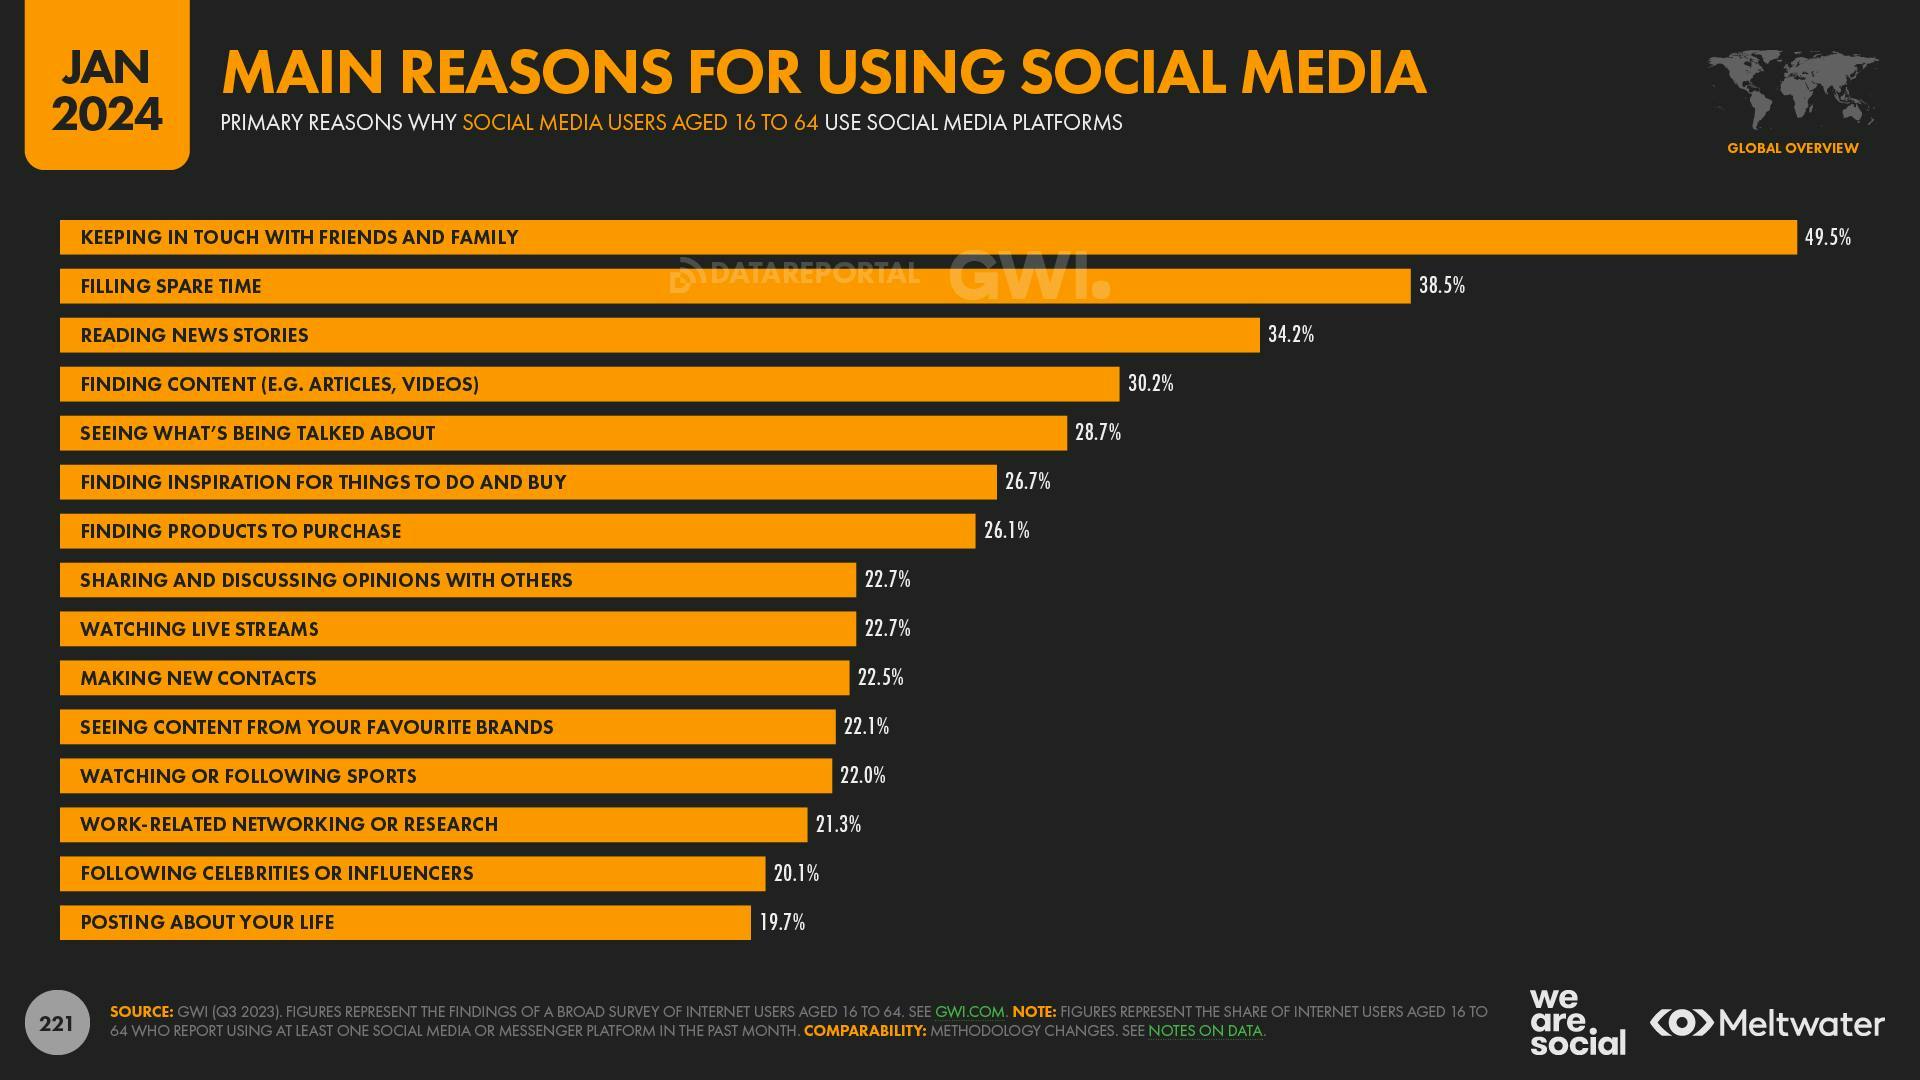 Main reasons for using social media